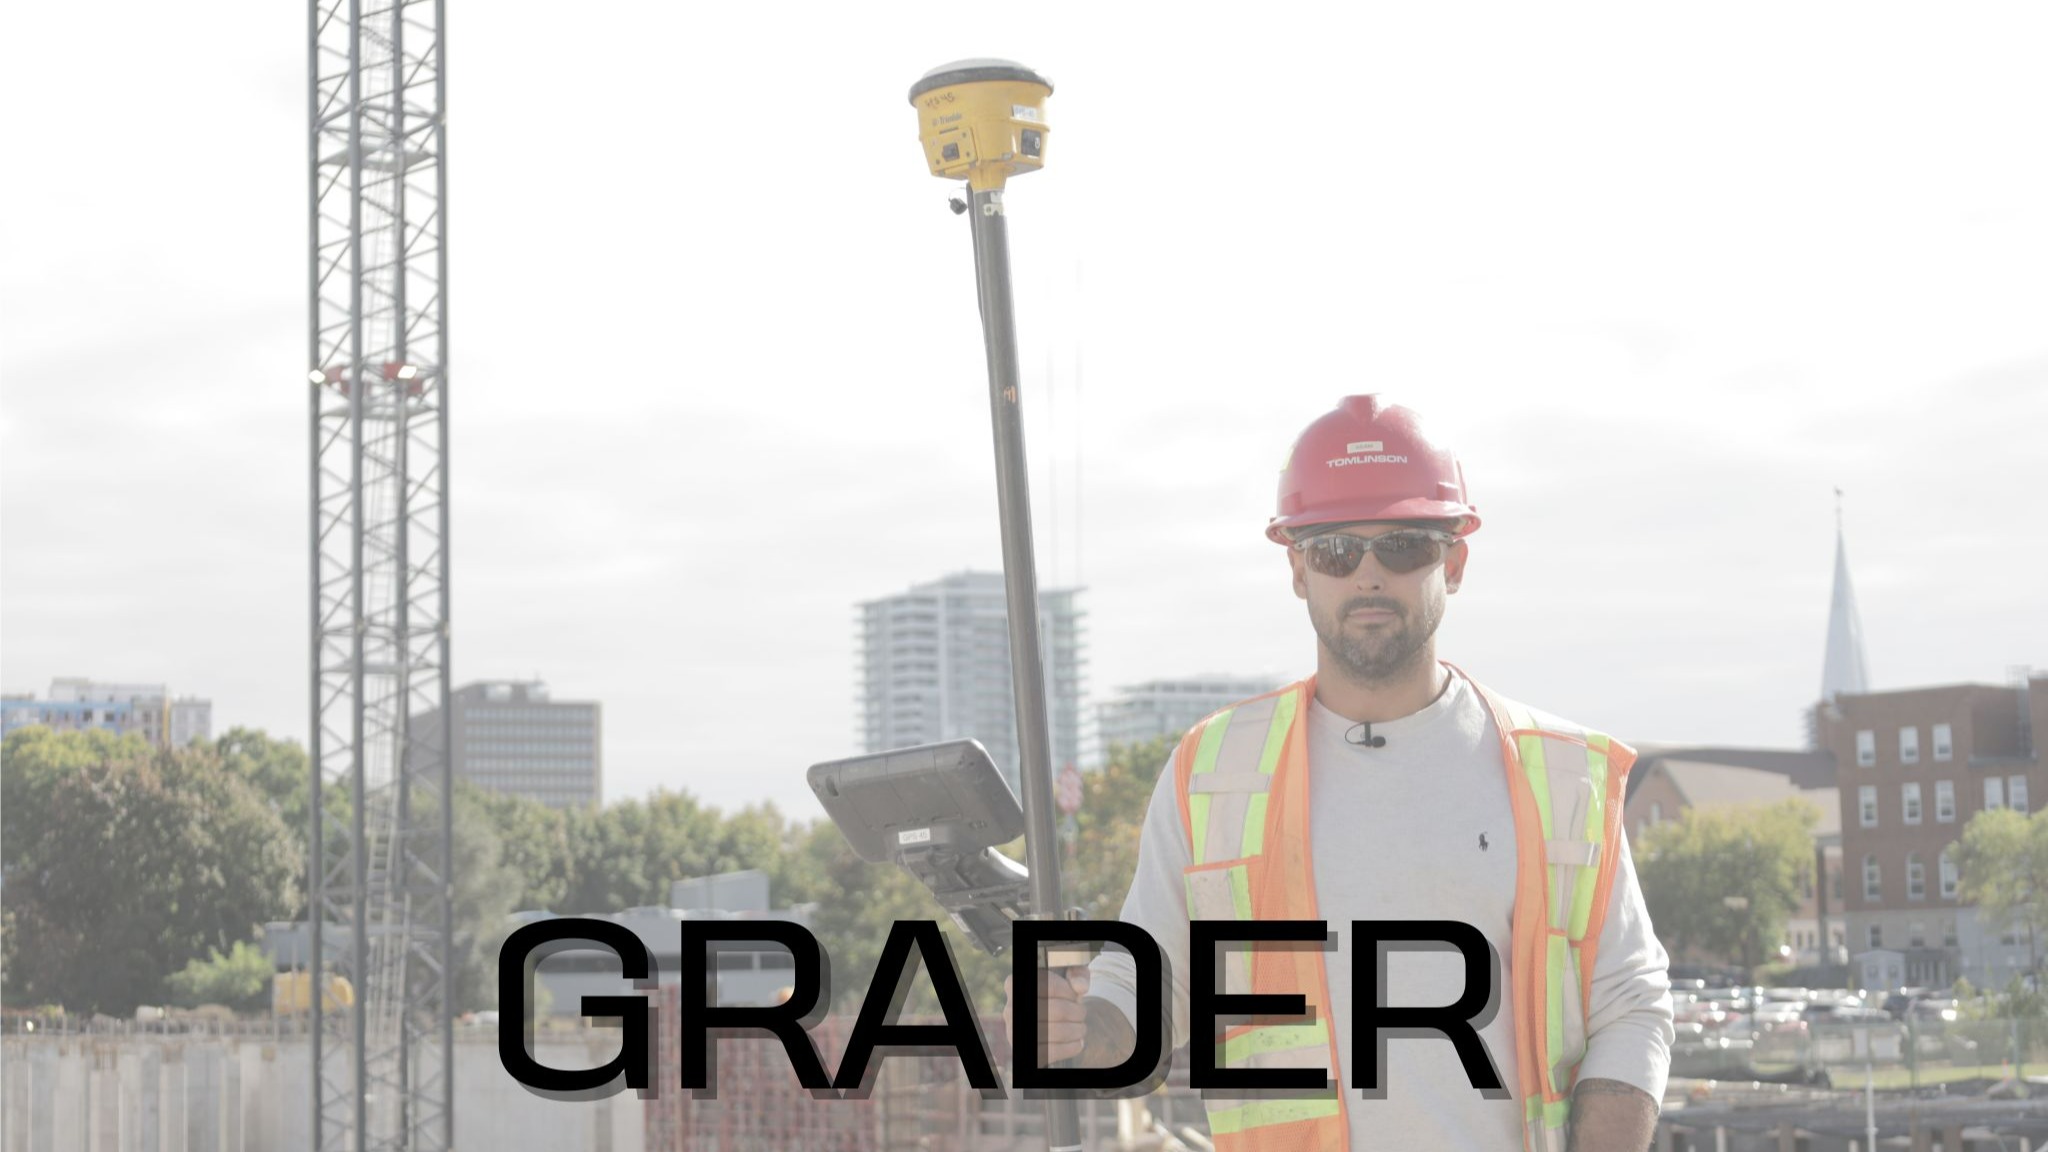 Grader Operator - Experienced